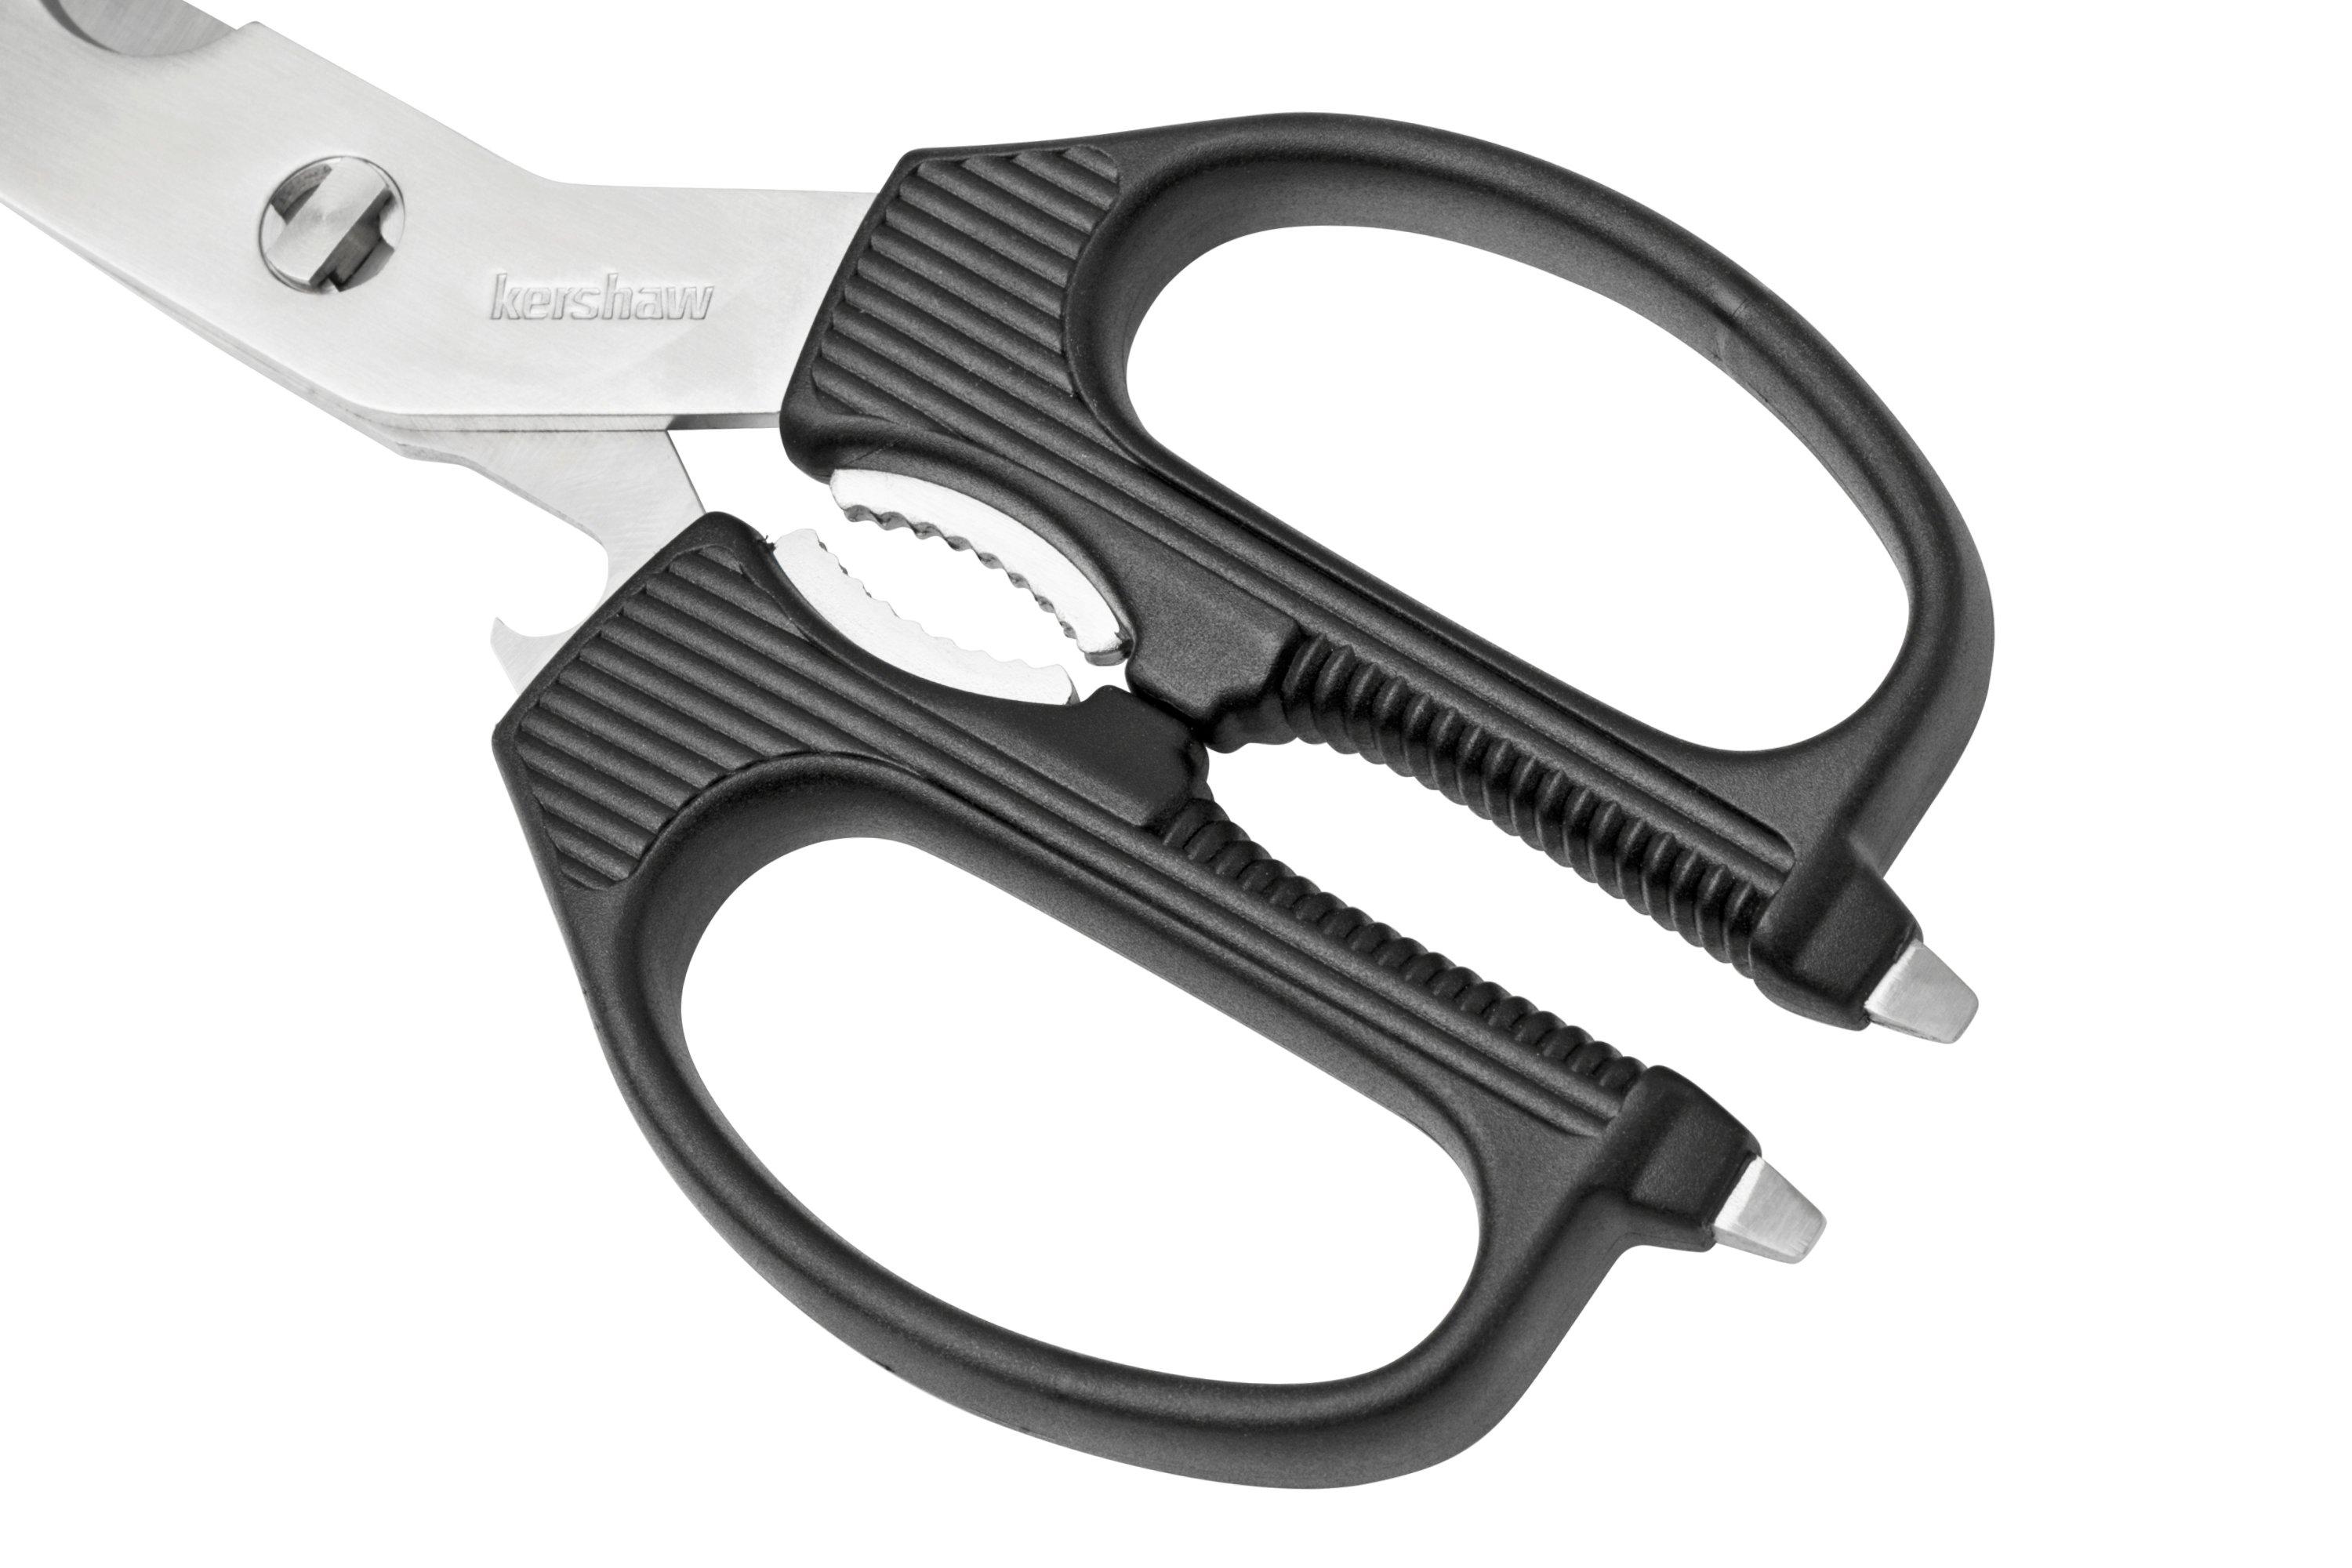 Kershaw Taskmaster 2 Kitchen Shears 1121 Scissors For Sale